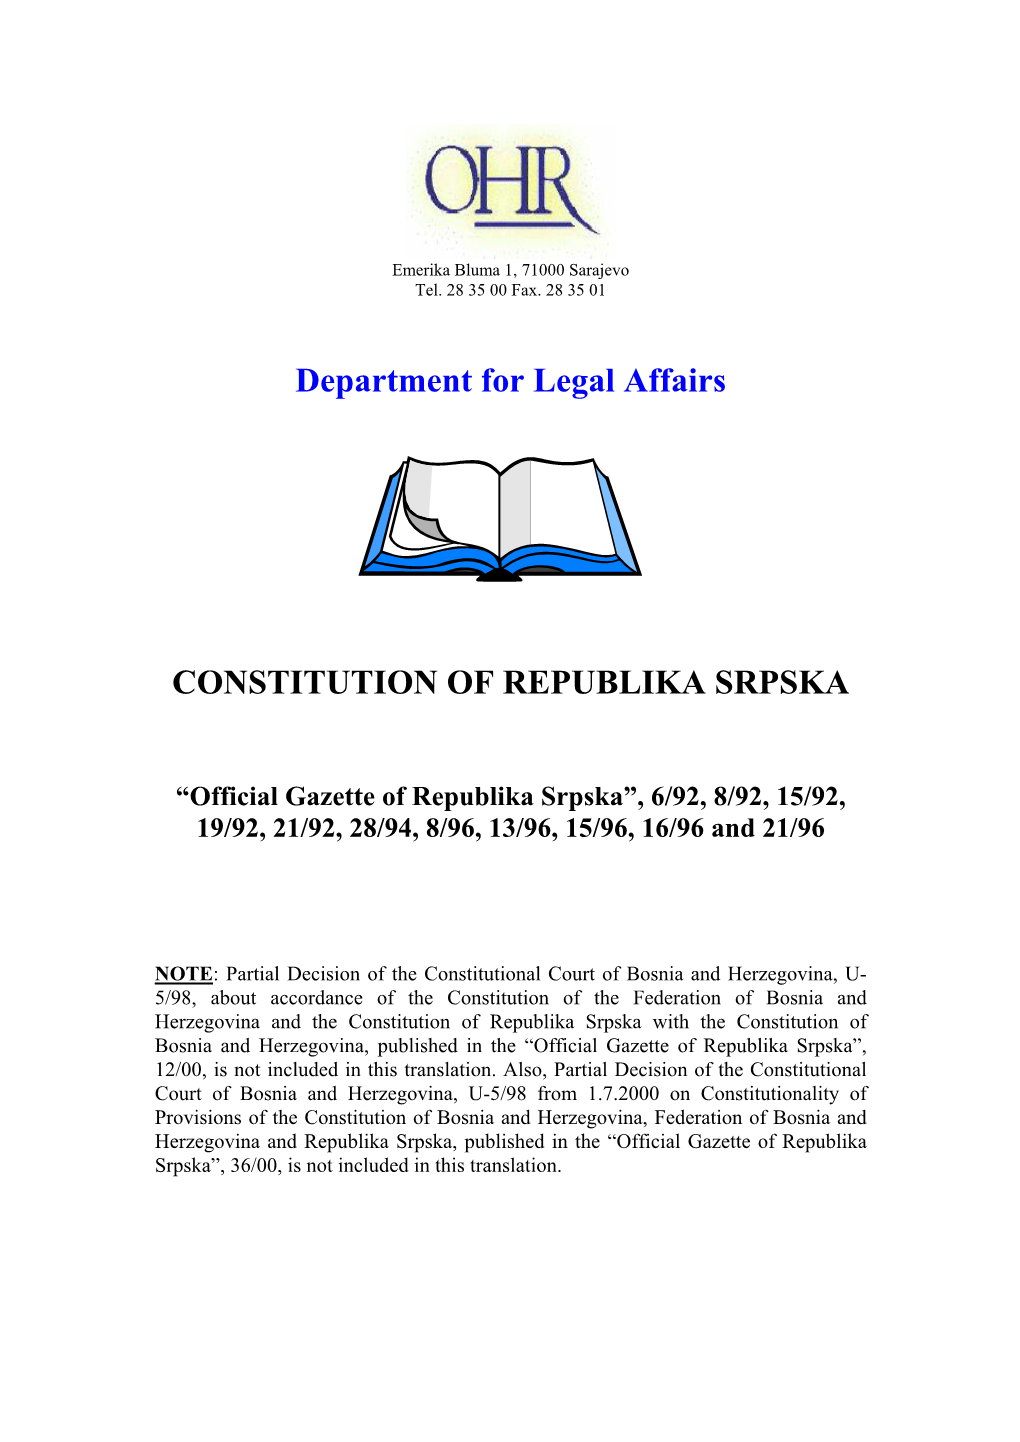 Constitution of the Republika Srpska